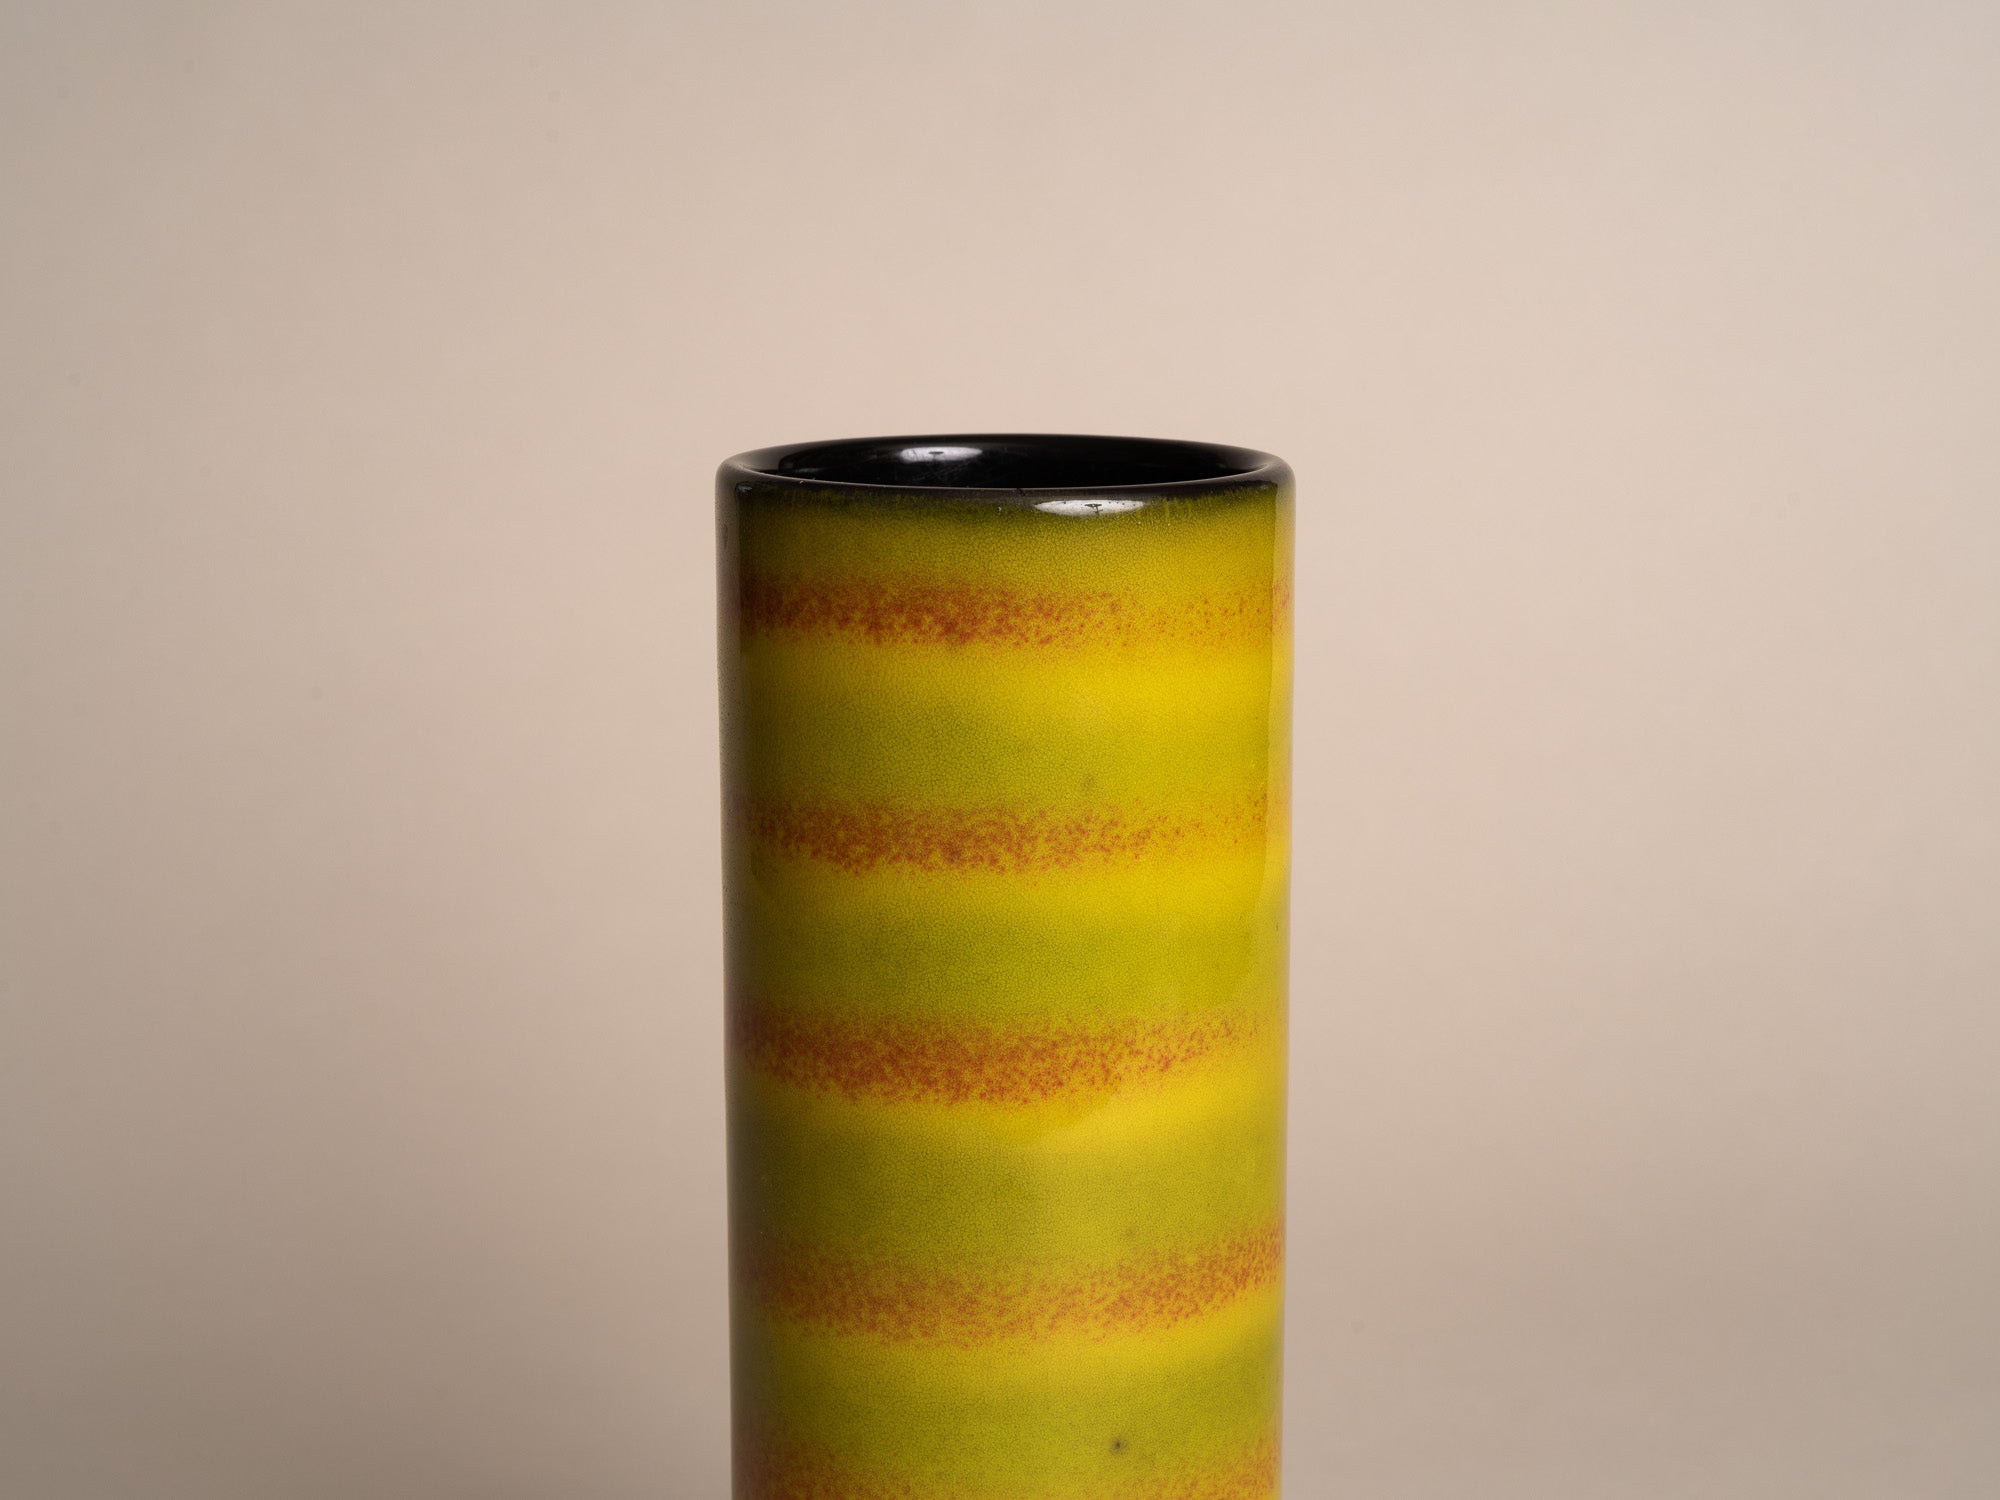 Vase rouleau de Fernand Elchinger à soufflenheim, France (vers 1957-58)..Cylindric vase by Fernand Elchinger in soufflenheim, France (circa 1957-58)